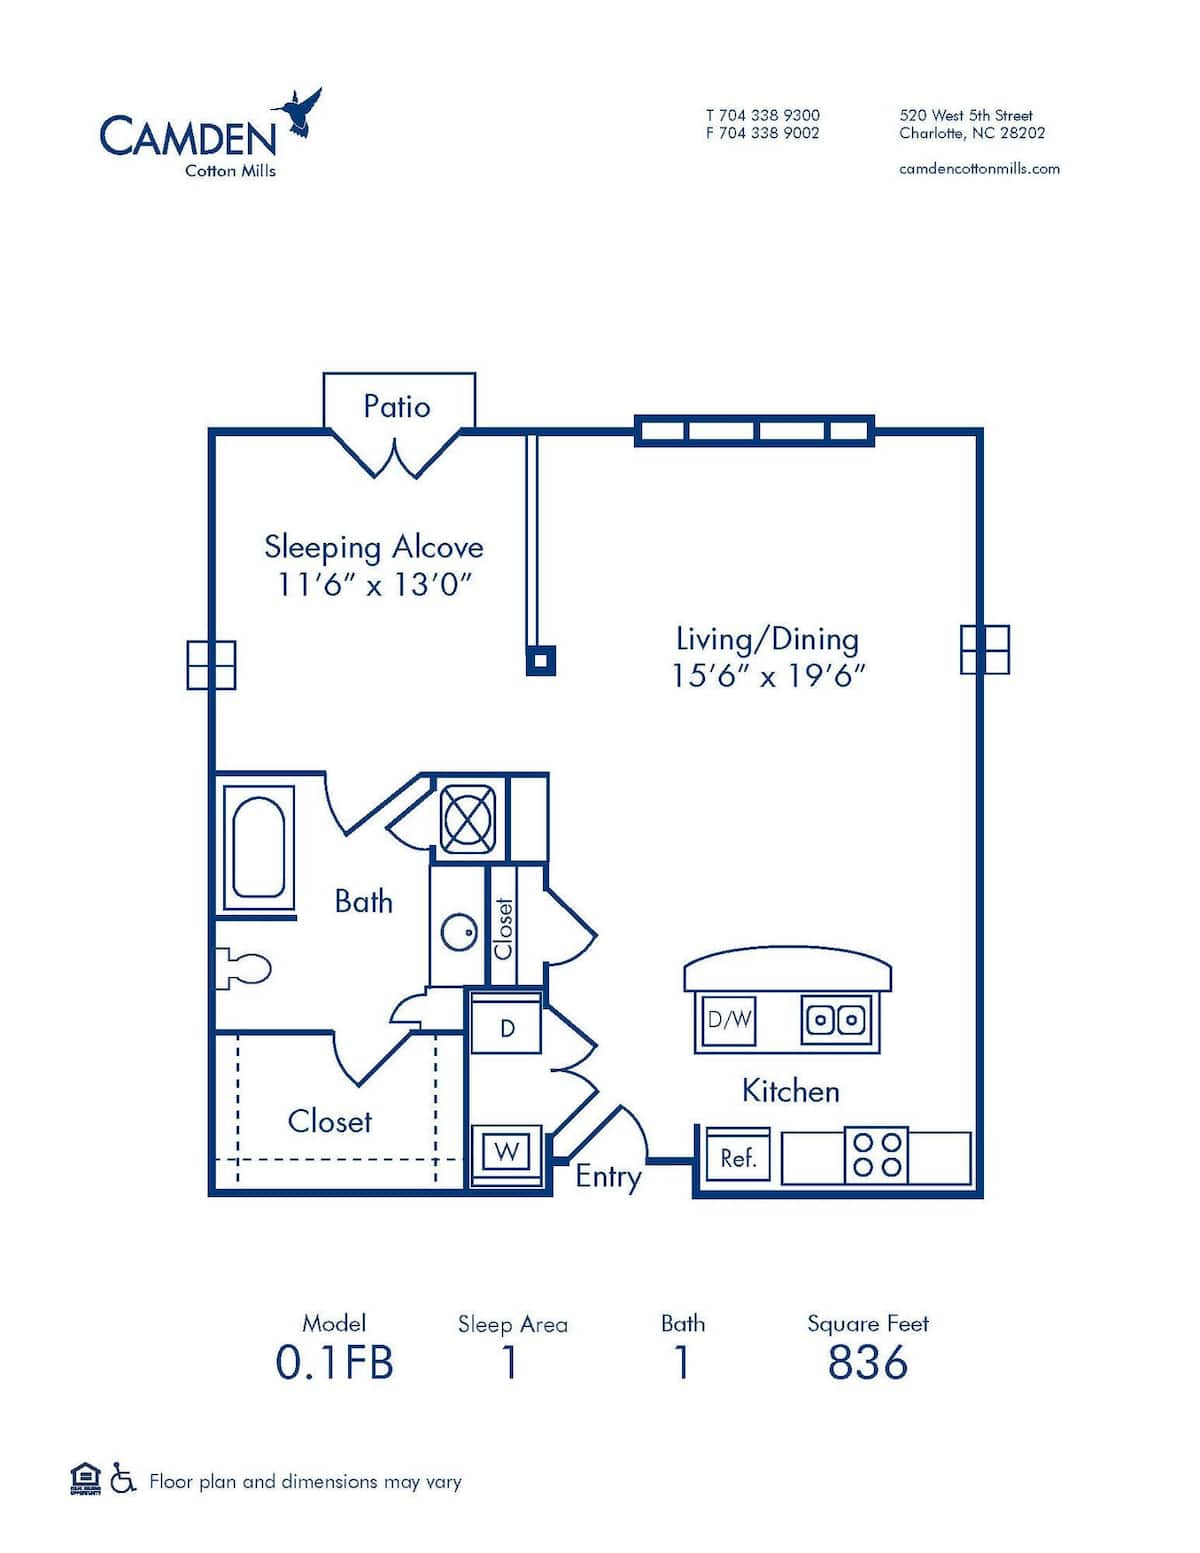 Floorplan diagram for 0.1FB, showing Studio